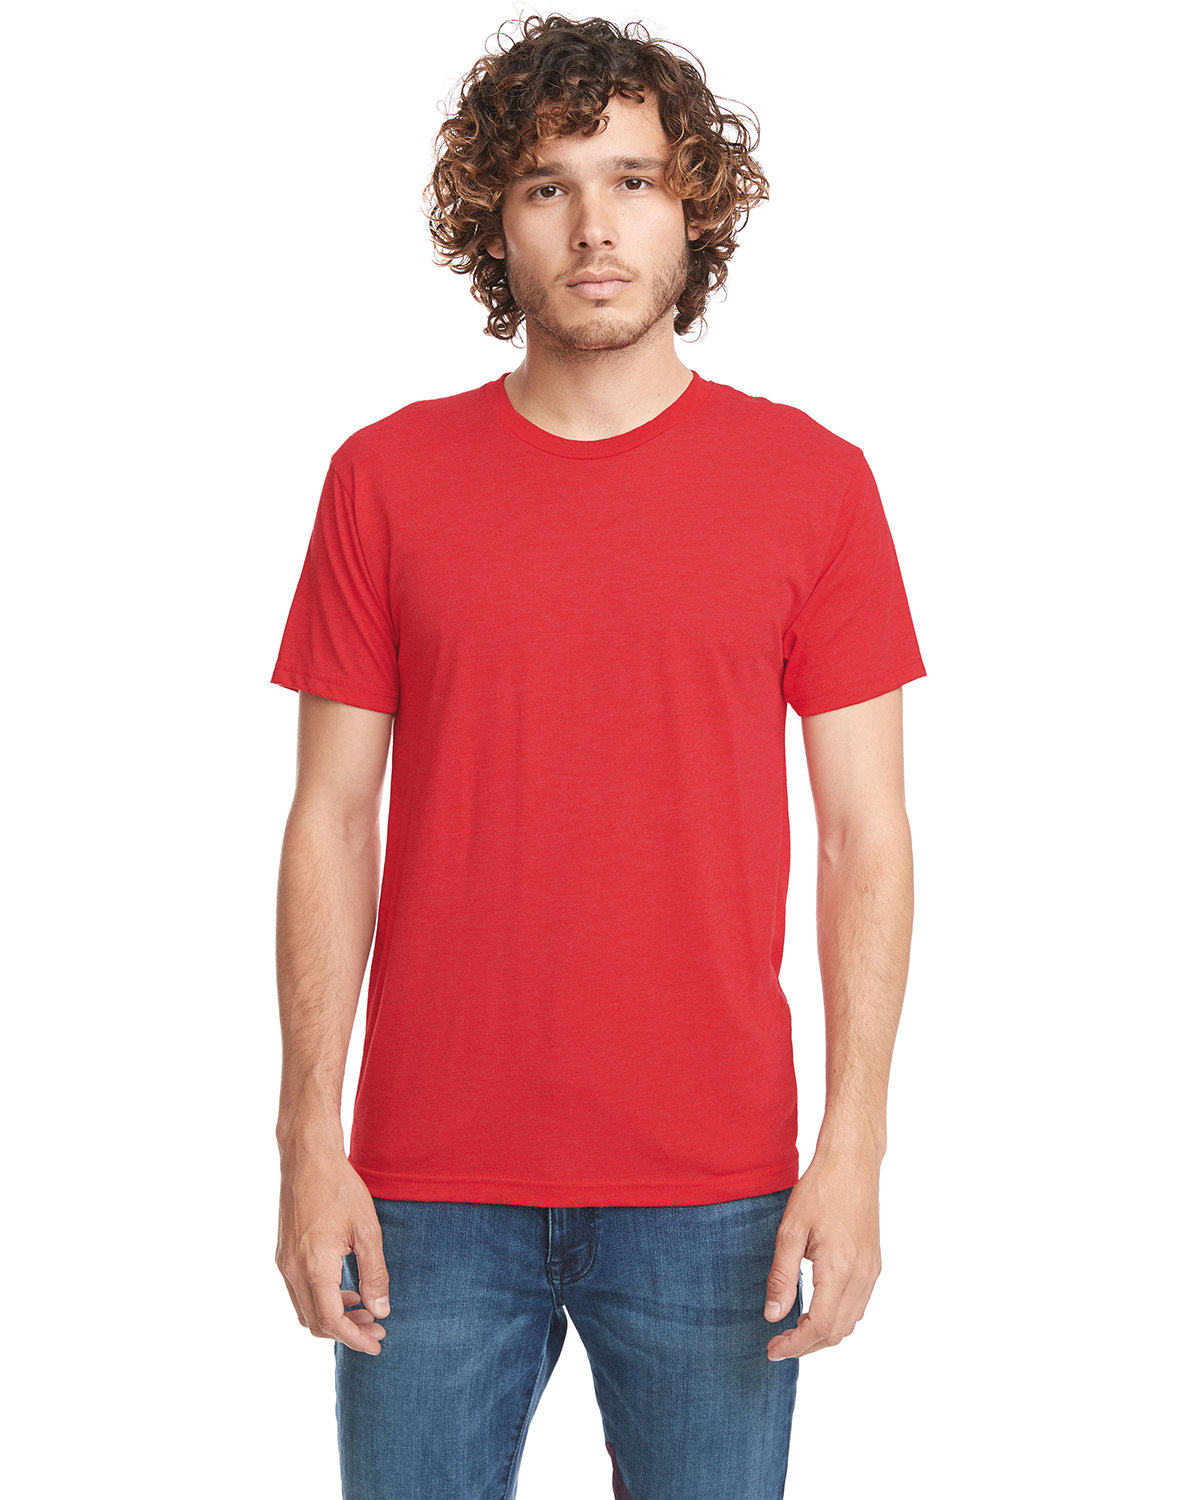 https://images.shirtspace.com/fullsize/D6Oj6VoZNeG1POJpLA7C7g%3D%3D/332277/5048-next-level-6010-unisex-tri-blend-t-shirt-front-vintage-red.jpg